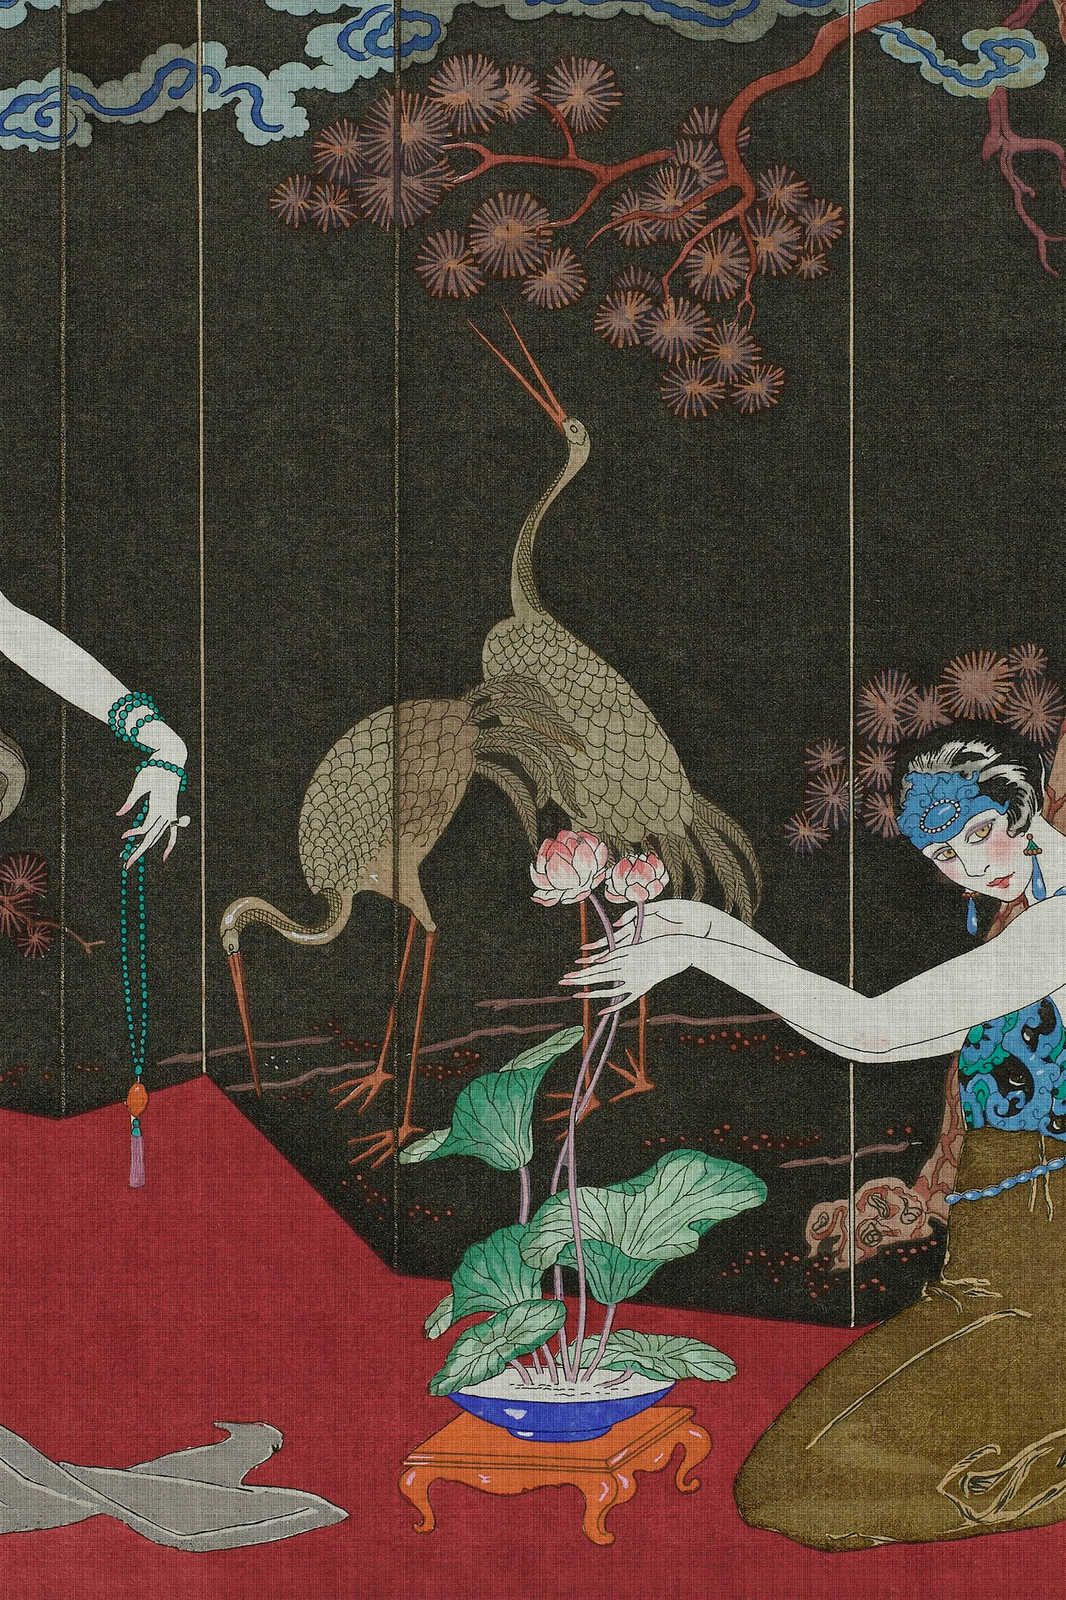             Babylon 1 - Leinwandbild Kunstdruck Klassisch Asiatisch Inspiriert – 1,20 m x 0,80 m
        